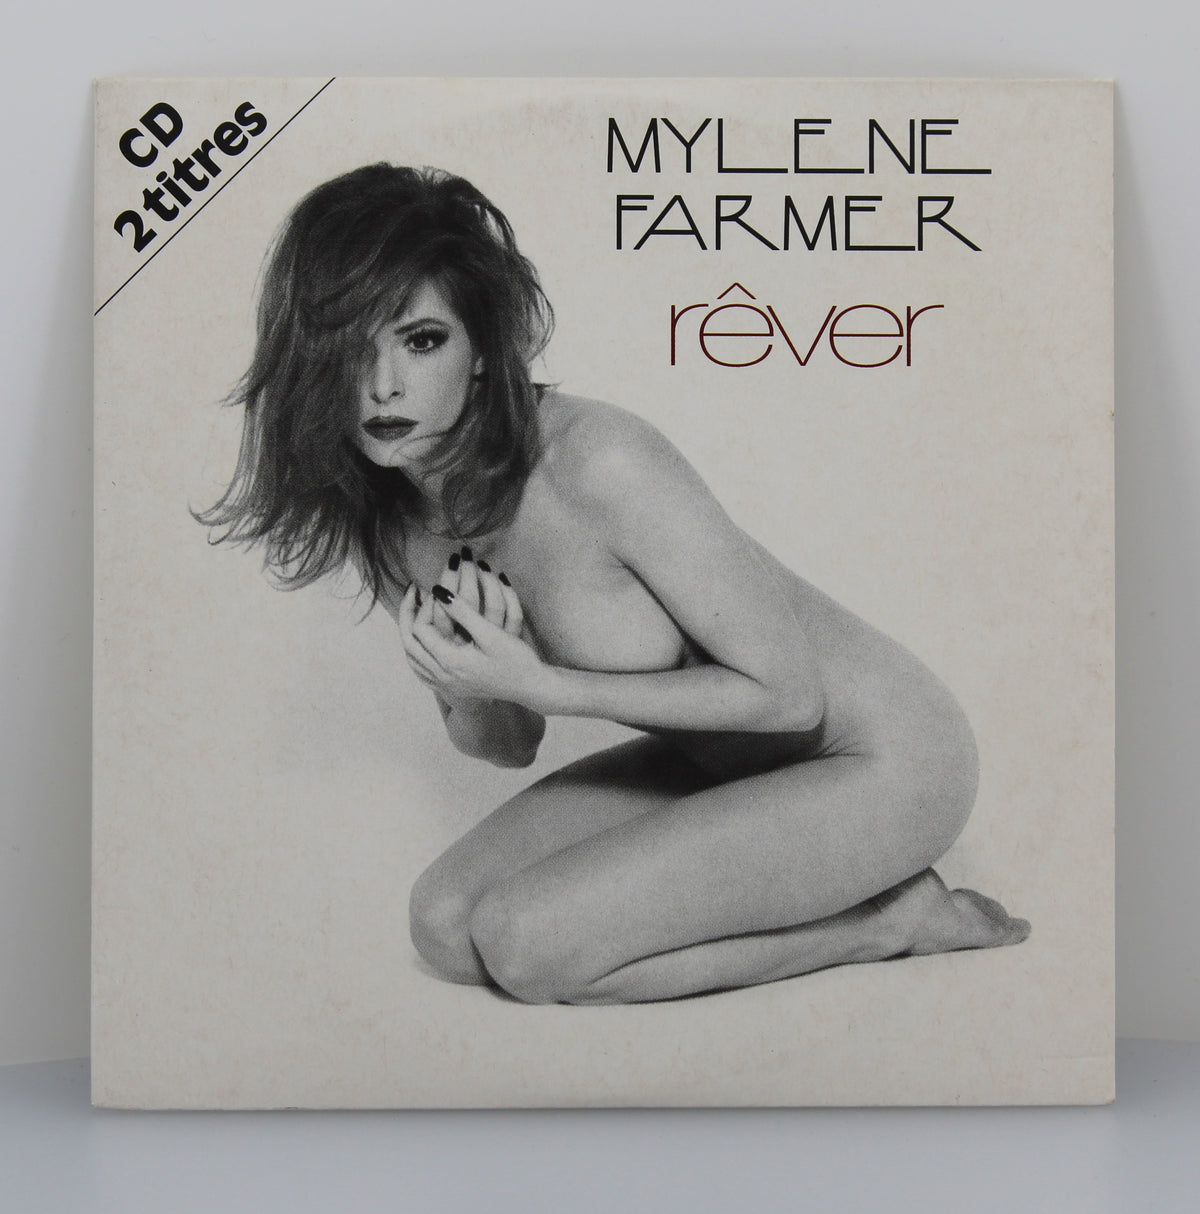 Mylene Farmer – Rêver, CD, Single, France 1996